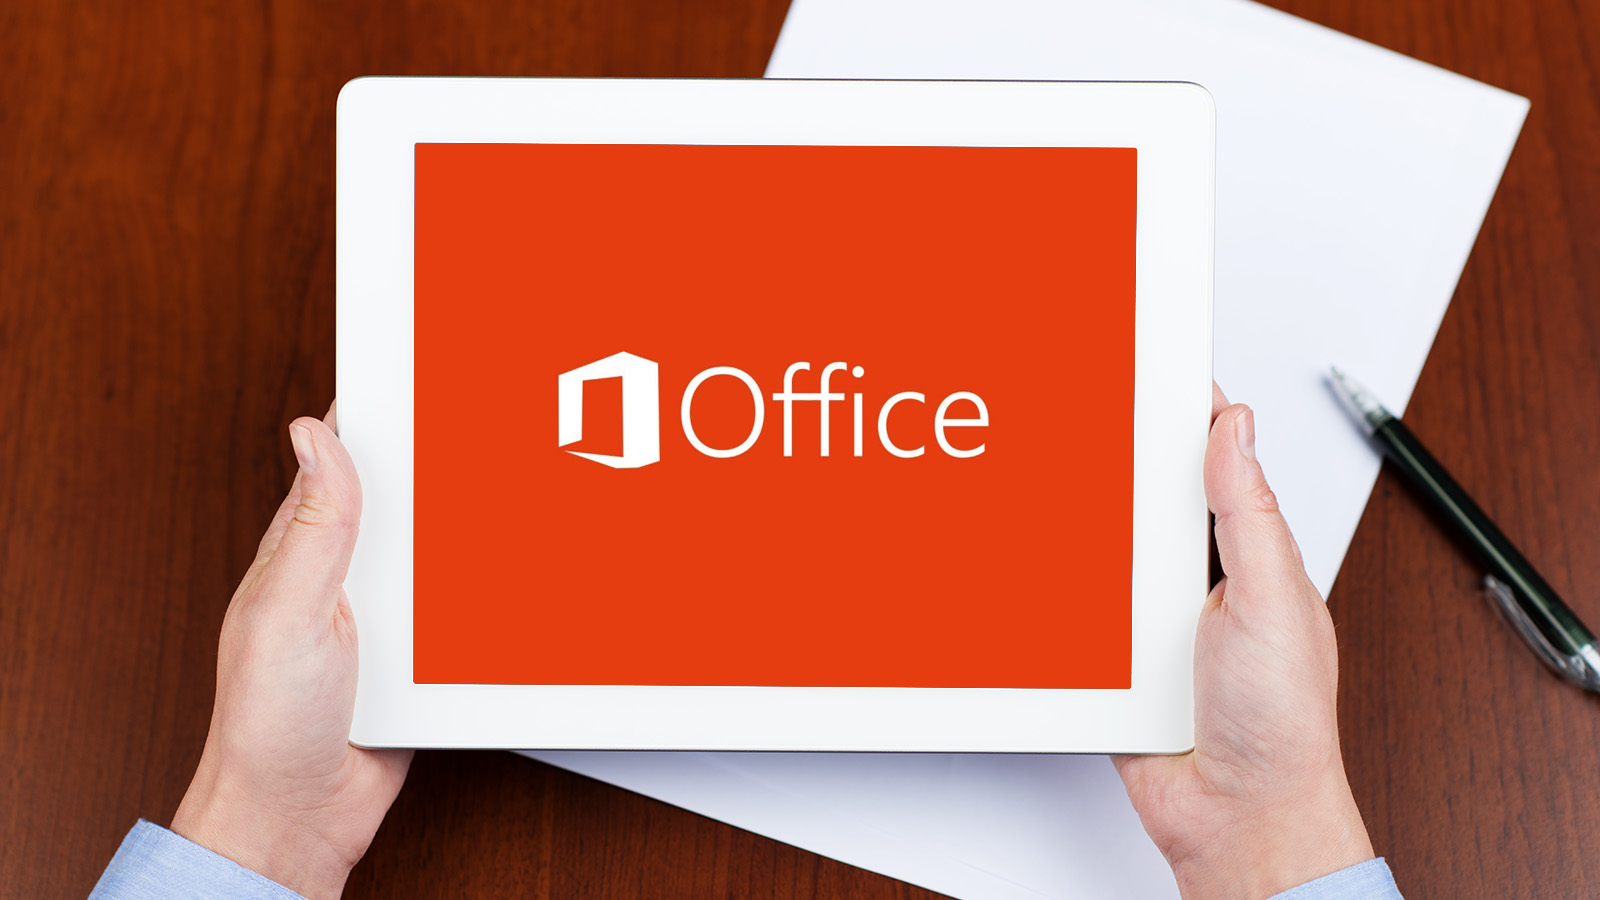 20140216 office ipad microsoft